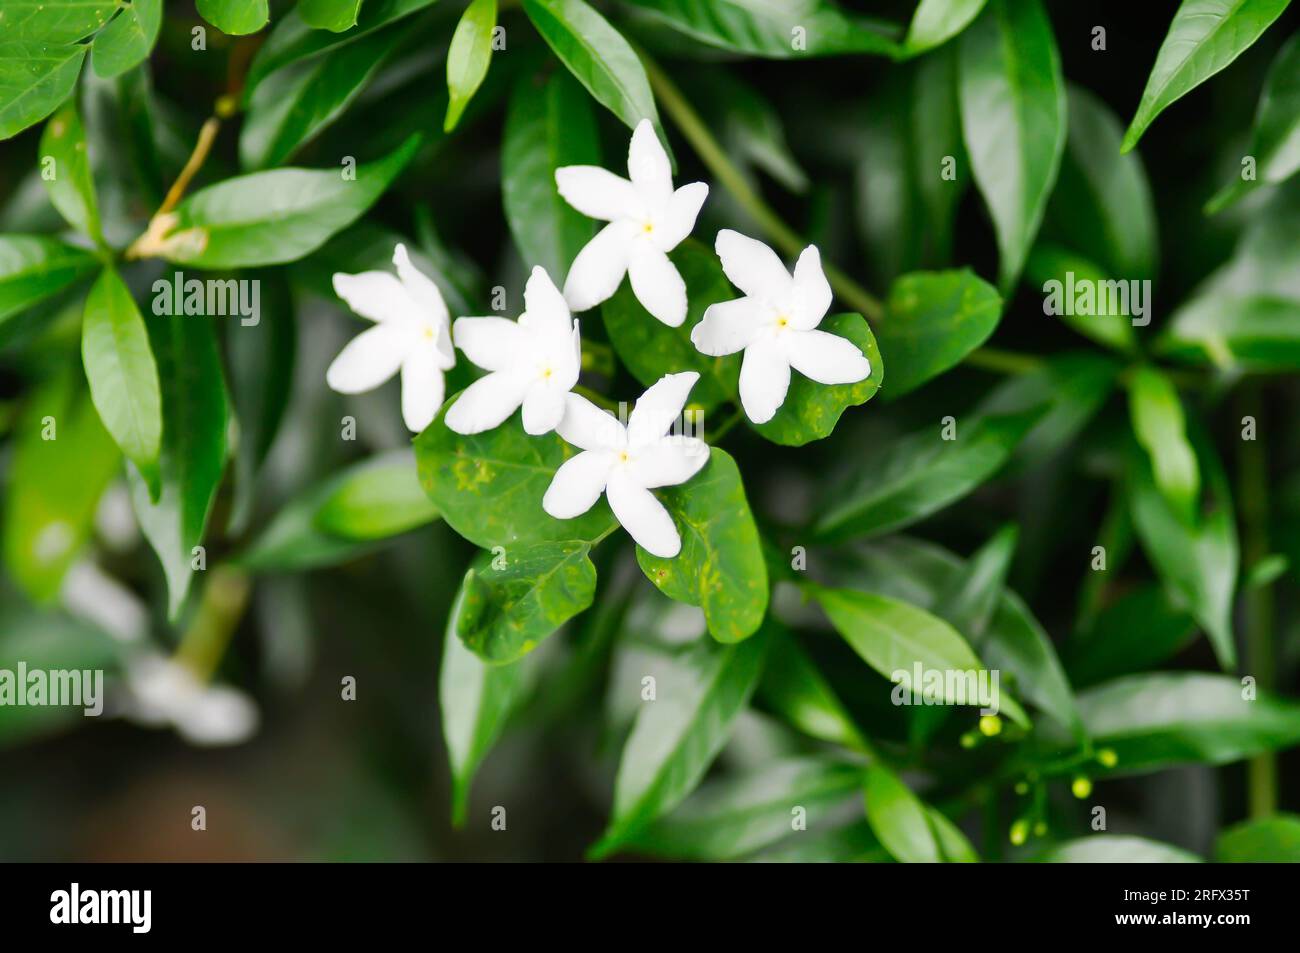 Tabernaemontana pandacaqui Lam, APOCYNACEAE or gardenia jasminoides or gerdenia flower or white flower Stock Photo